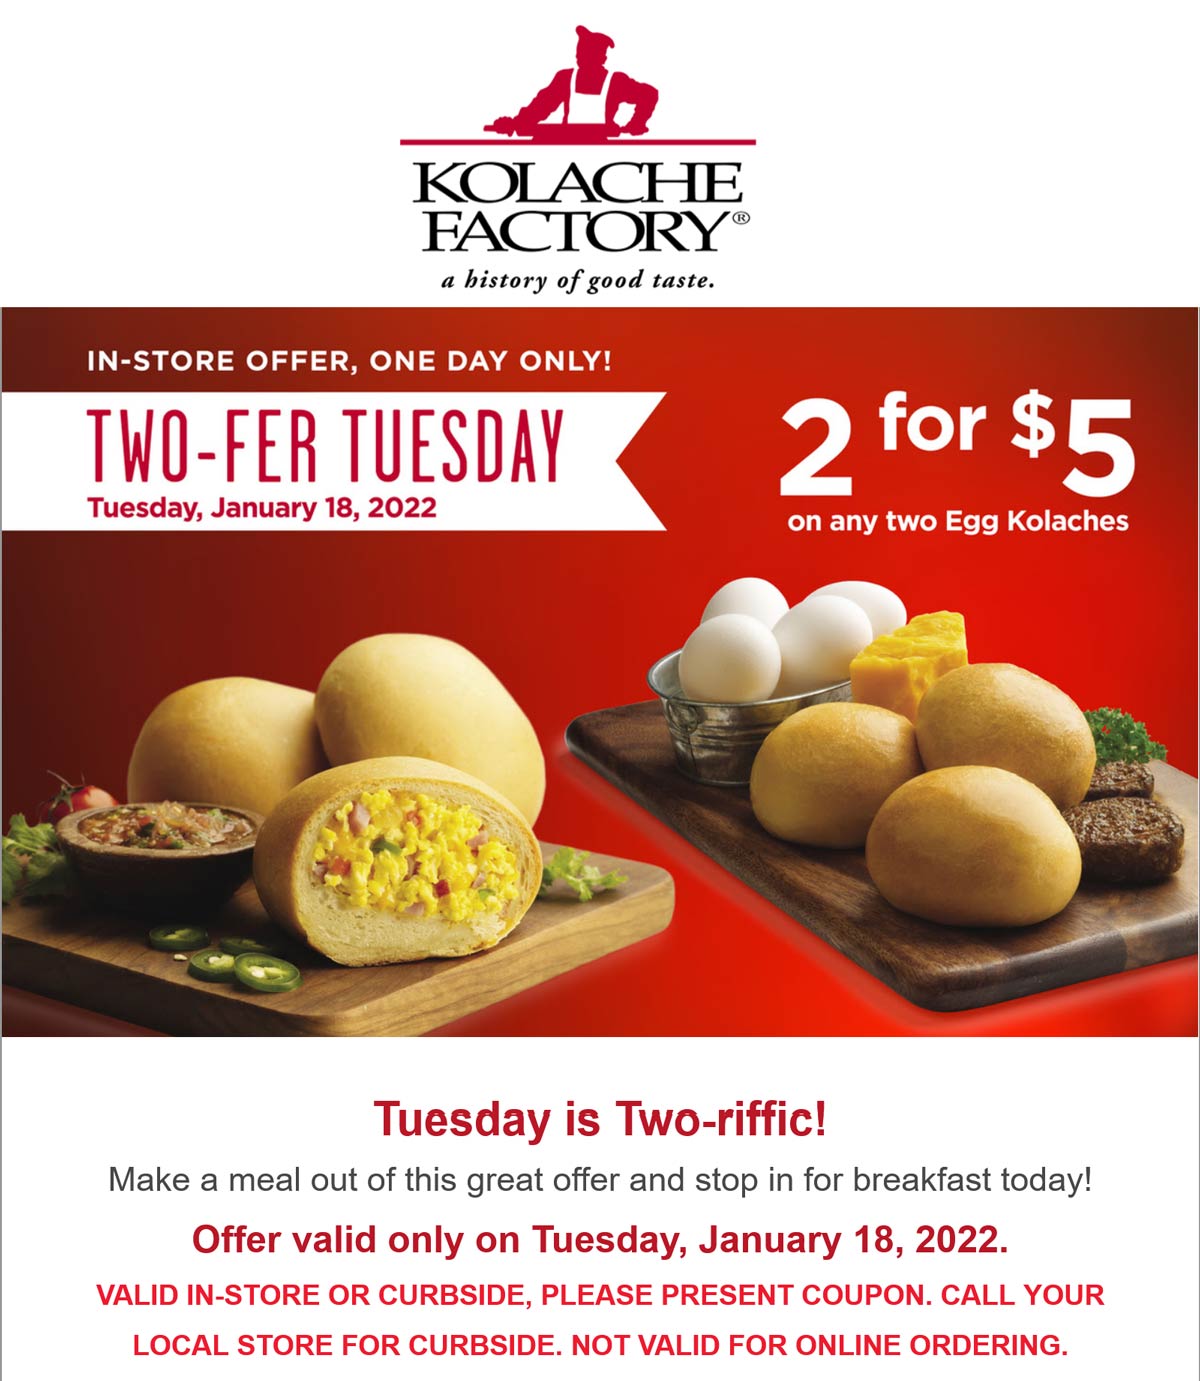 Kolache Factory restaurants Coupon  Any 2 egg kolaches for $5 Tuesday at Kolache Factory restaurants #kolachefactory 